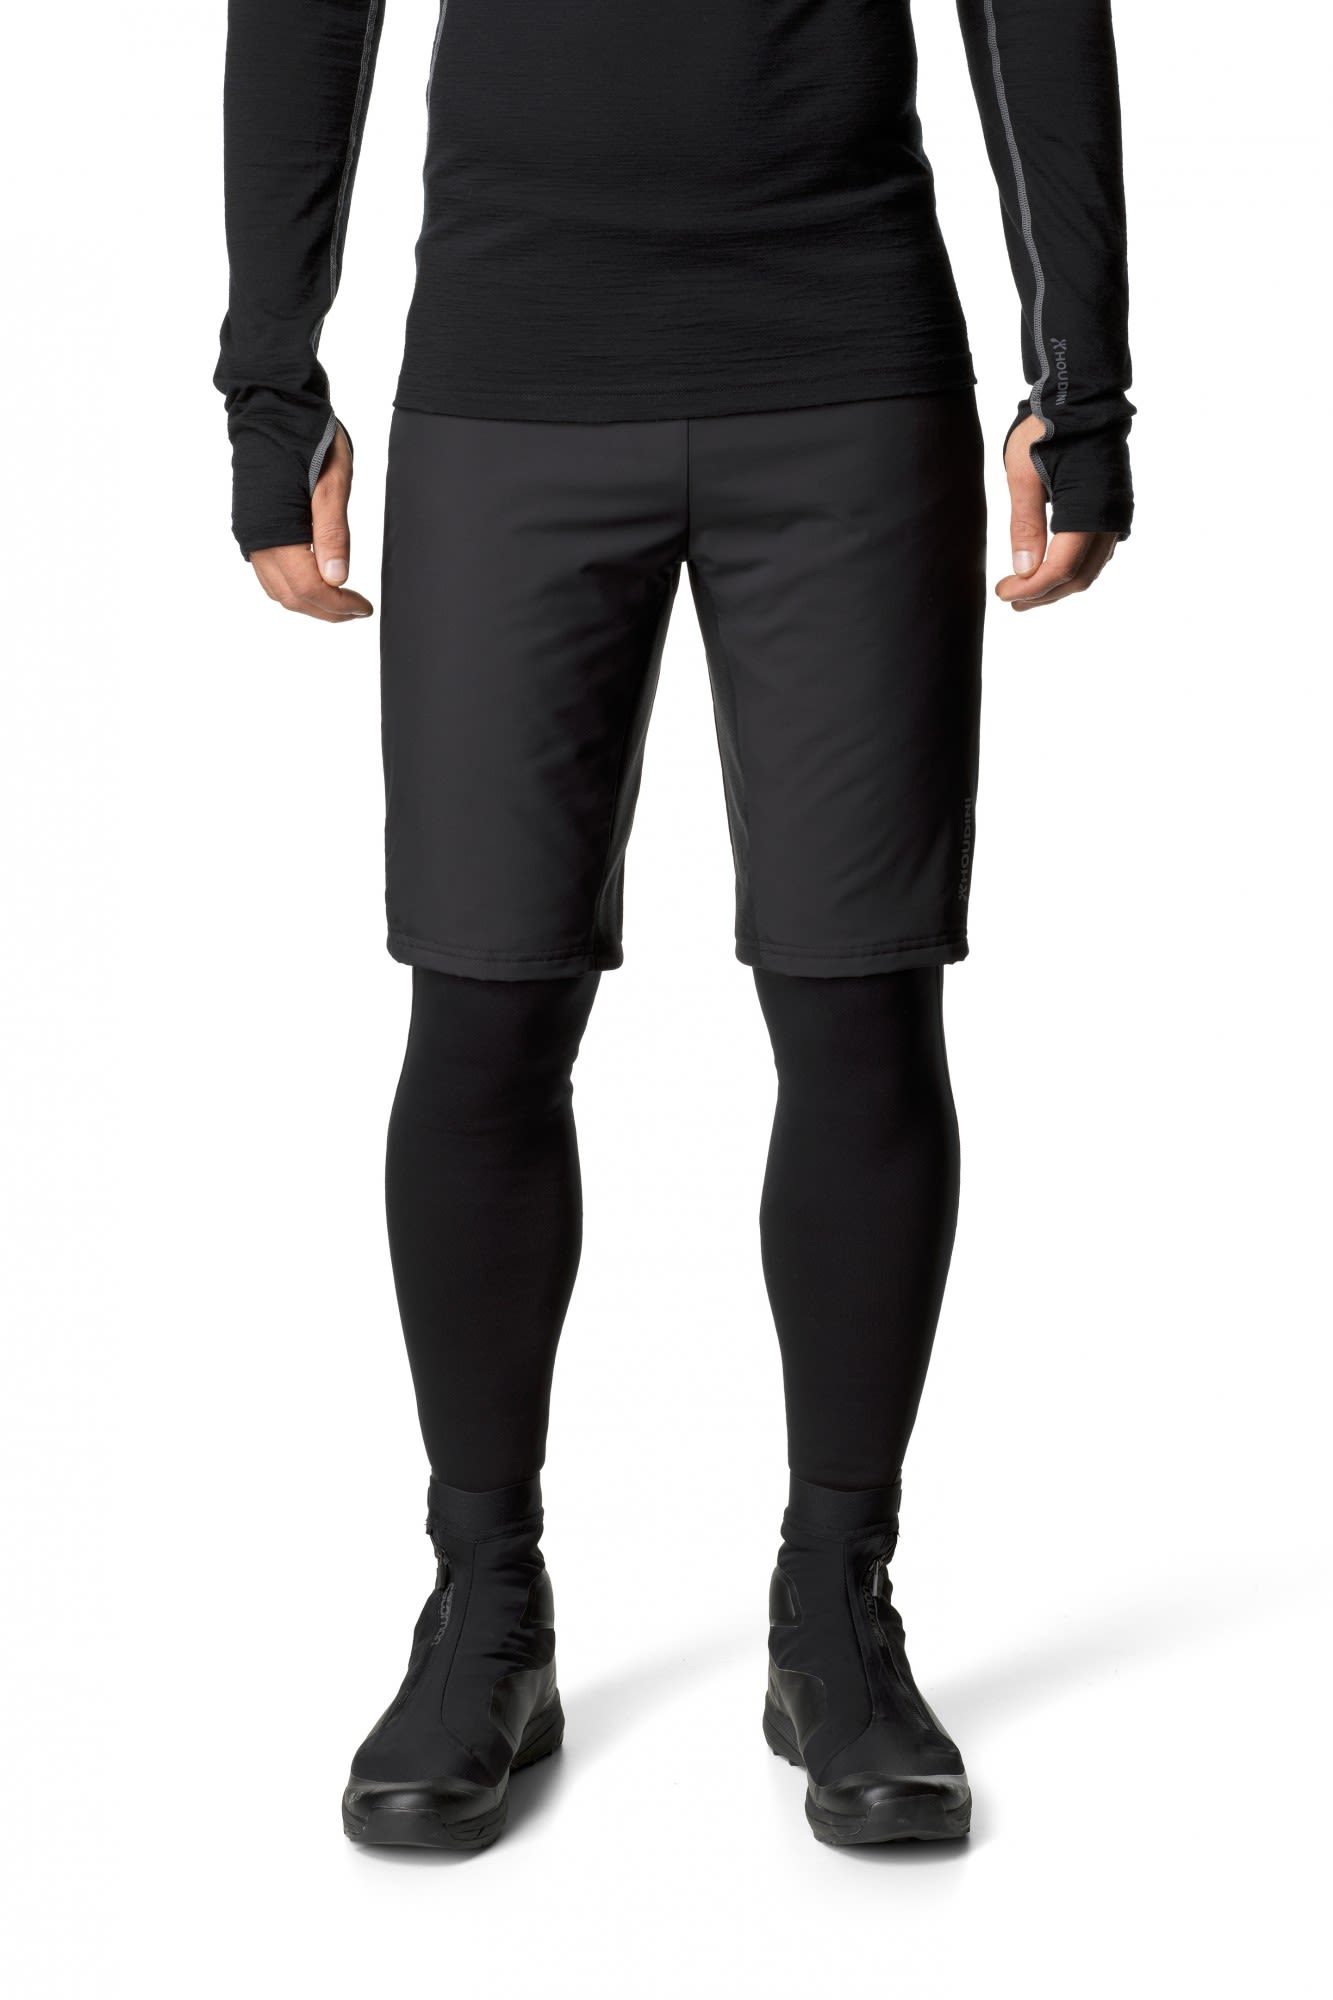 Houdini Moonwalk Shorts Schwarz- Male PrimaLoft(R) Hosen- Grsse S - Farbe True Black unter Houdini